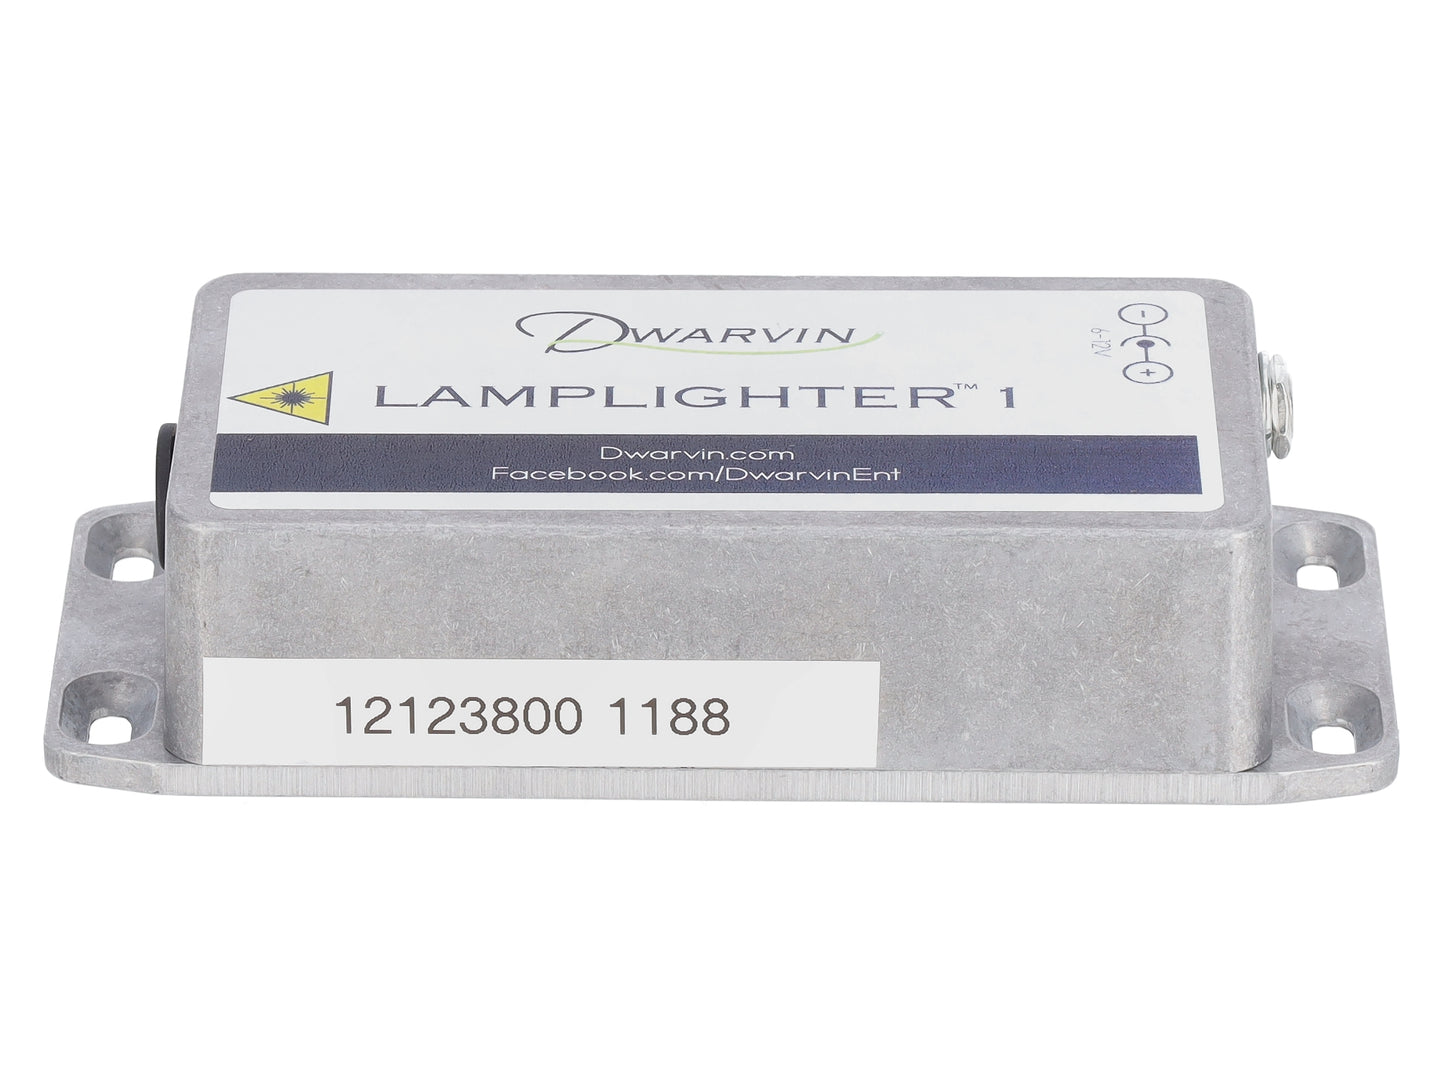 Dwarvin DVSK102 Lamplighter 1 Starter Kit with 1.5mm Fiber